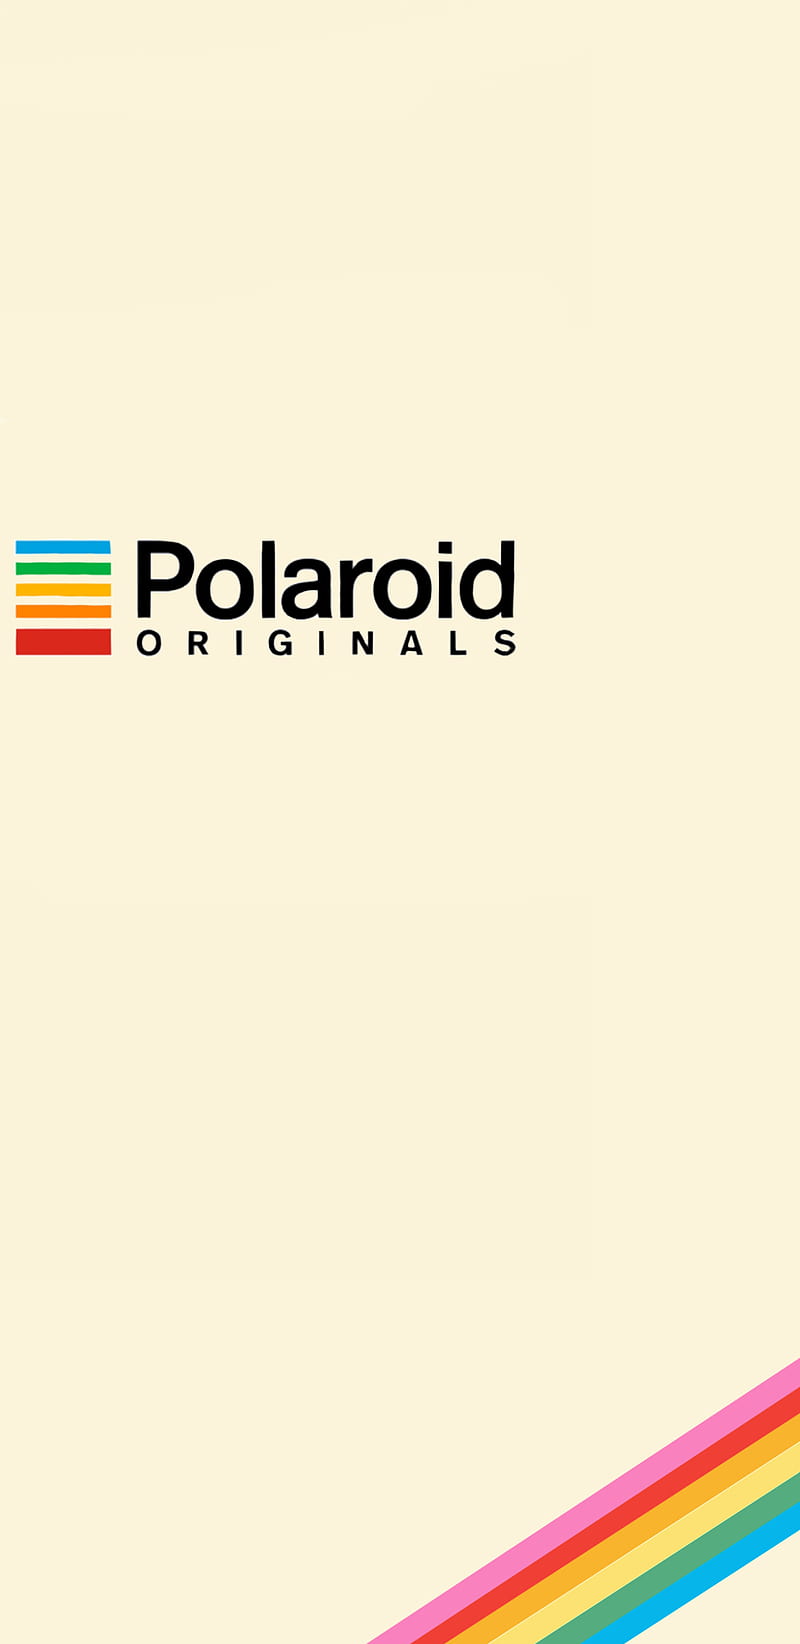 Polaroid Originals wallpaper featuring the Polaroid Originals logo on a light yellow background with a rainbow stripe at the bottom. - Polaroid